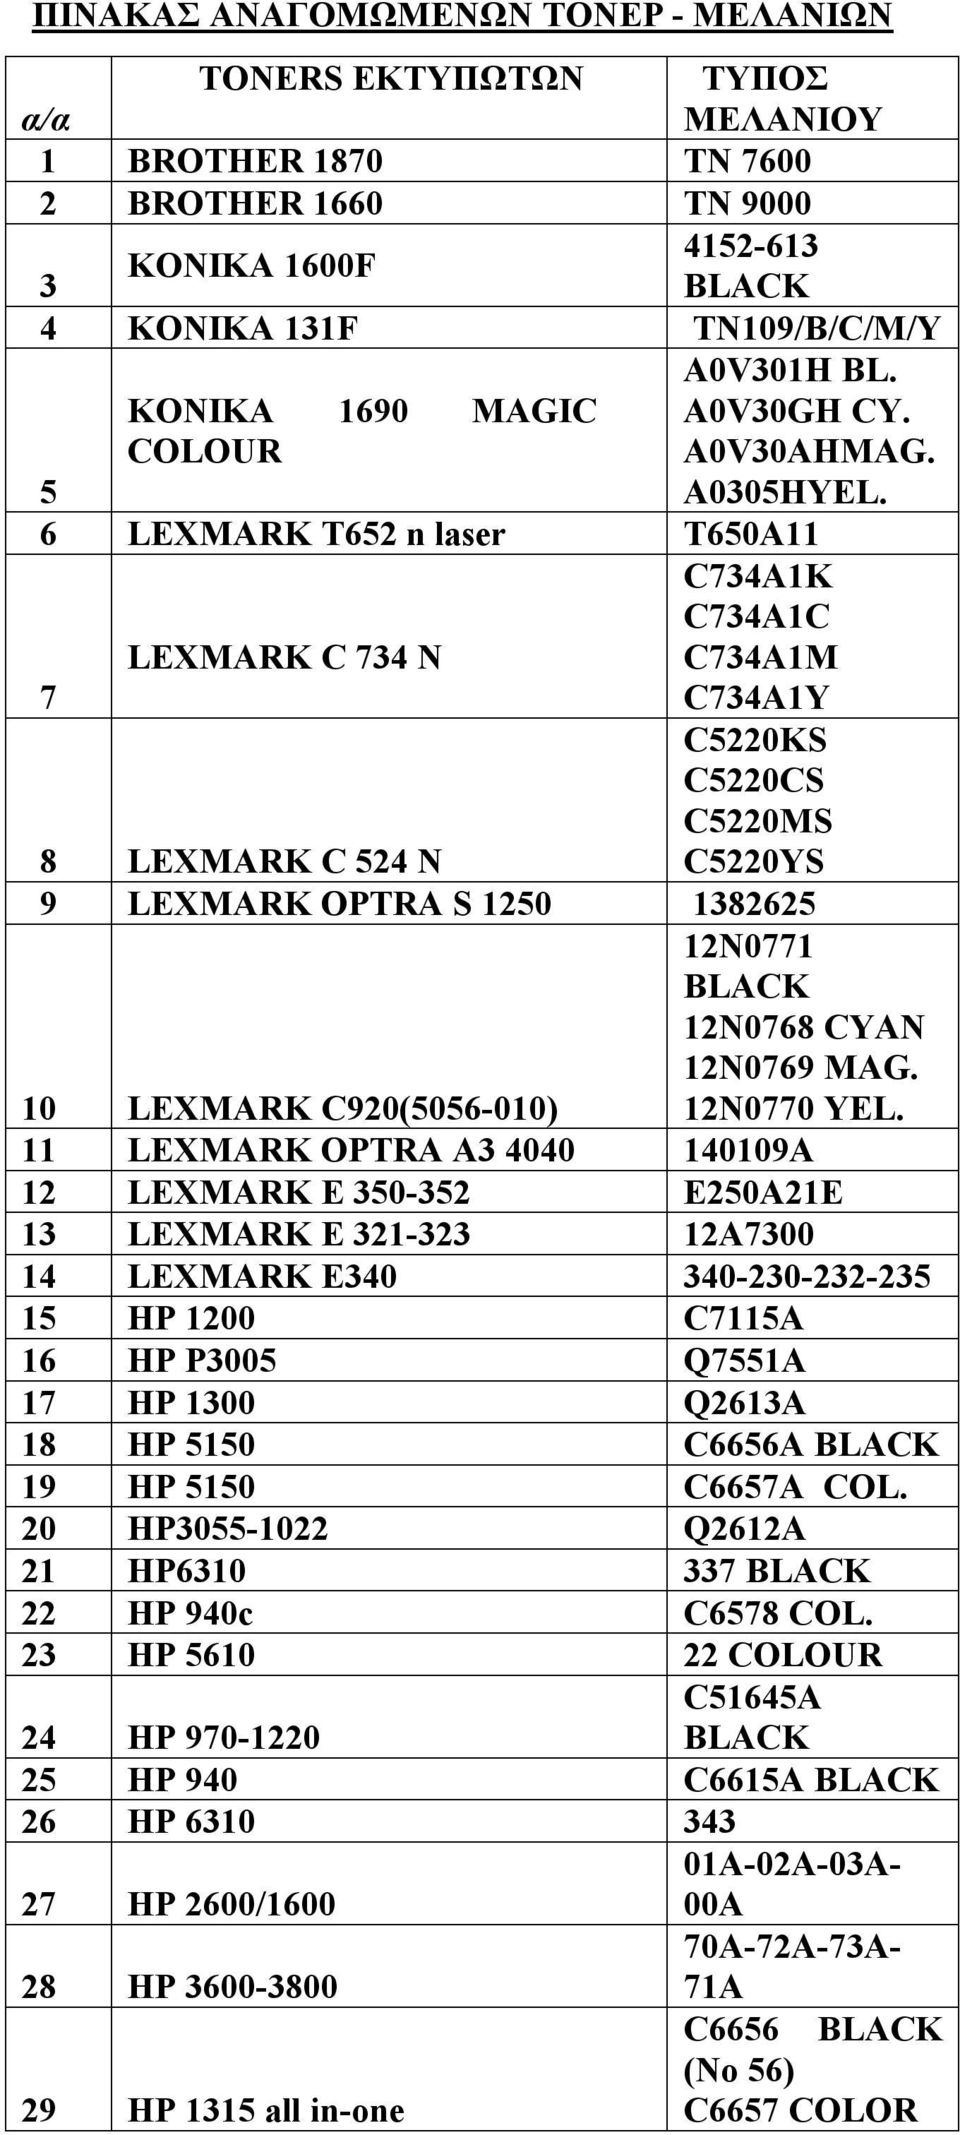 KONIKA 1690 MAGIC COLOUR 5 6 LEXMARK T652 n laser T650A11 7 LEXMARK C 734 N C734A1K C734A1C C734A1M C734A1Y 8 LEXMARK C 524 N C5220KS C5220CS C5220MS C5220YS 9 LEXMARK OPTRA S 1250 1382625 12N0771